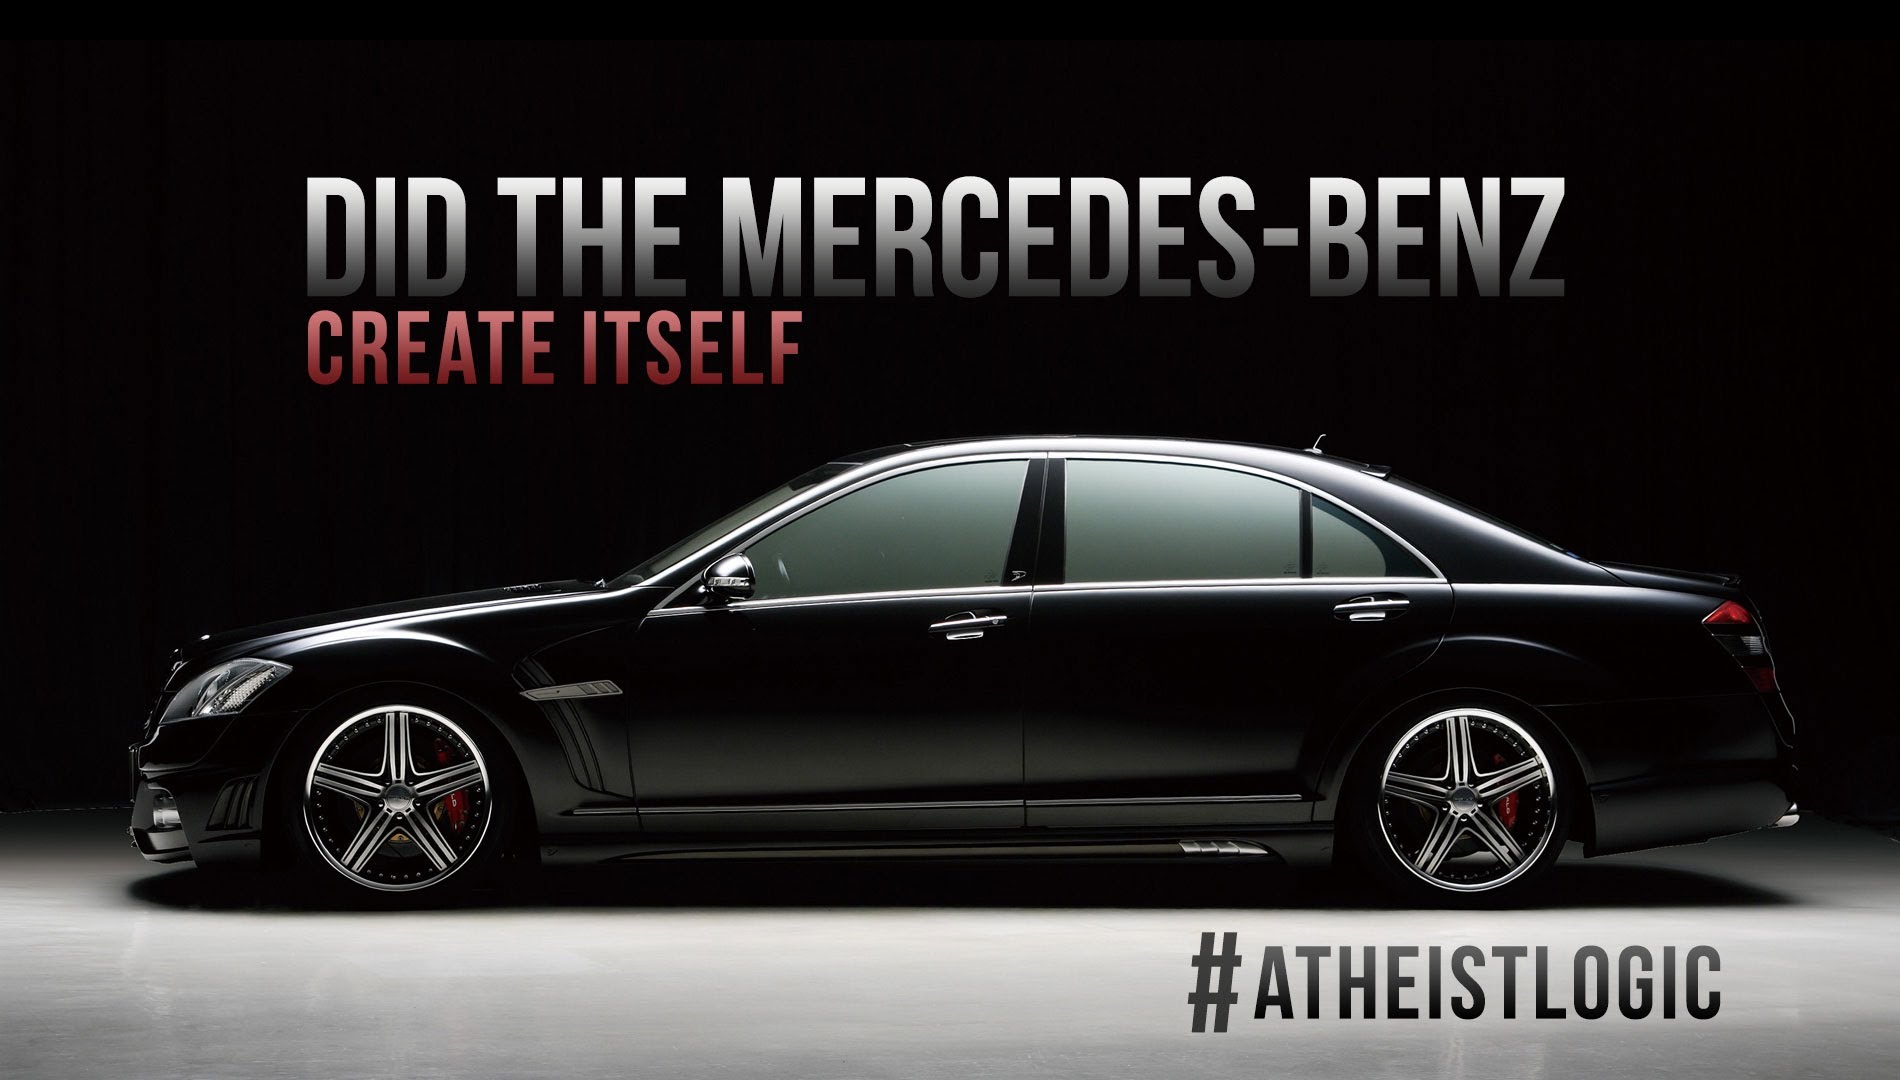 Did The Mercedes-Benz Create Itself? #ATHEISTLOGIC